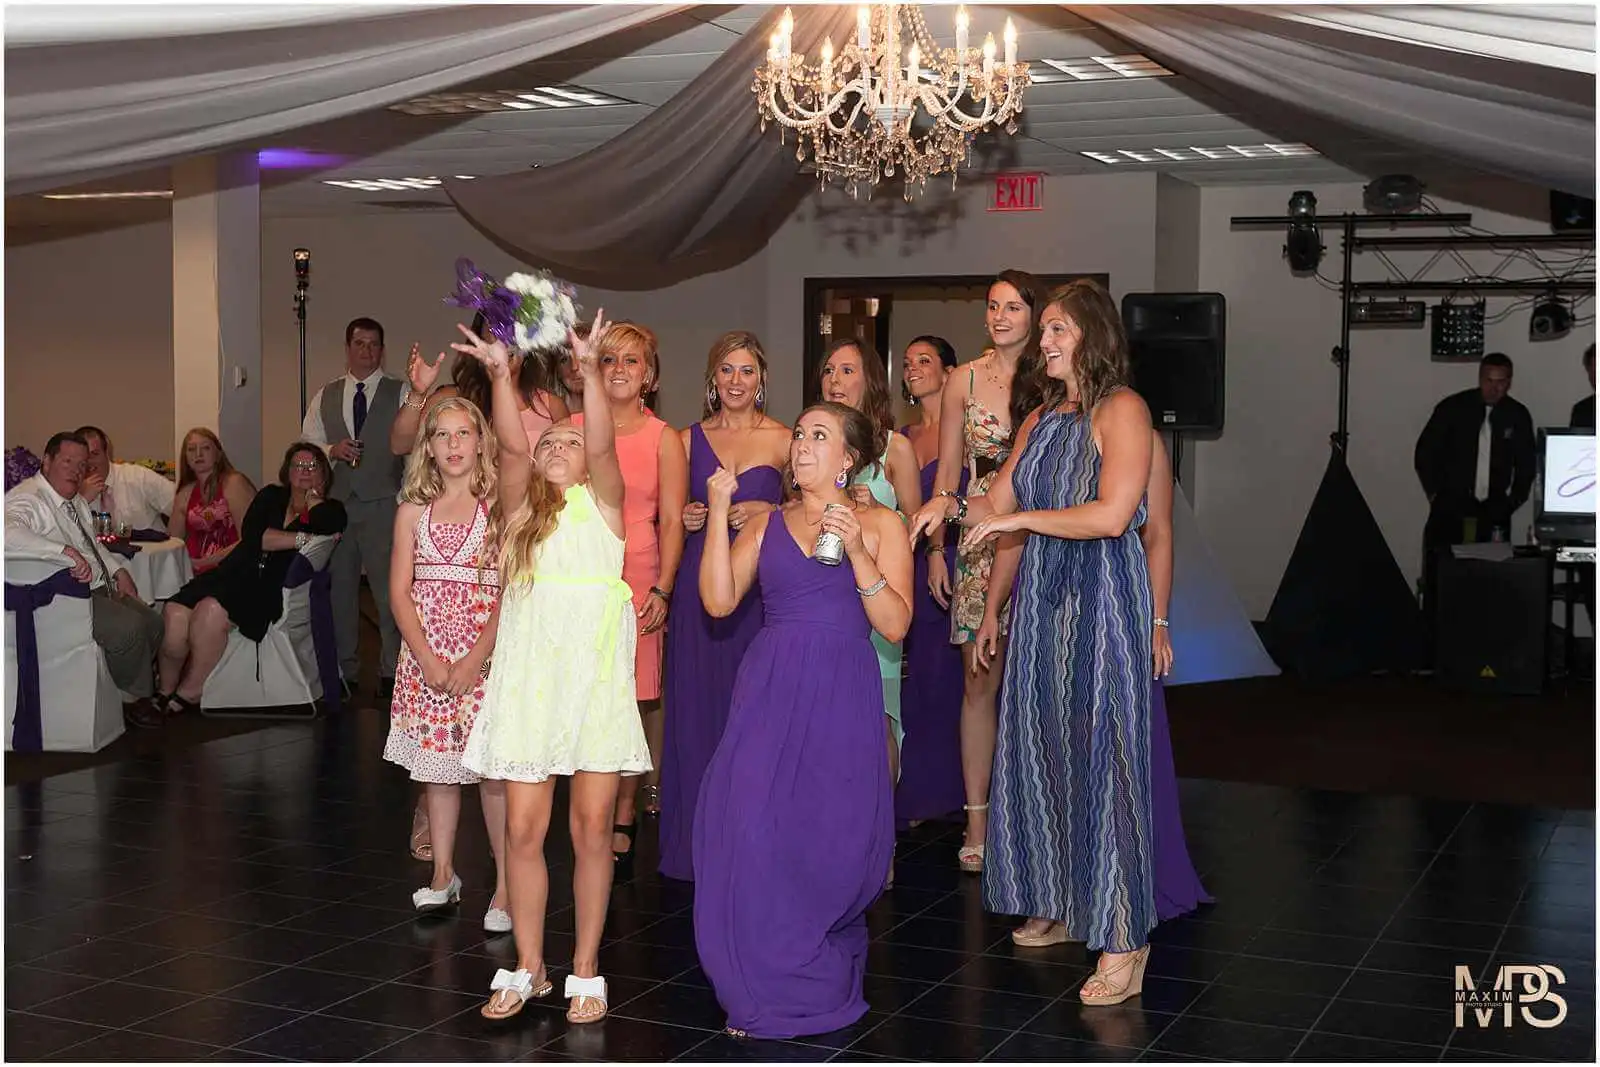 Kehoe Center Shelby Ohio wedding reception bouquet toss